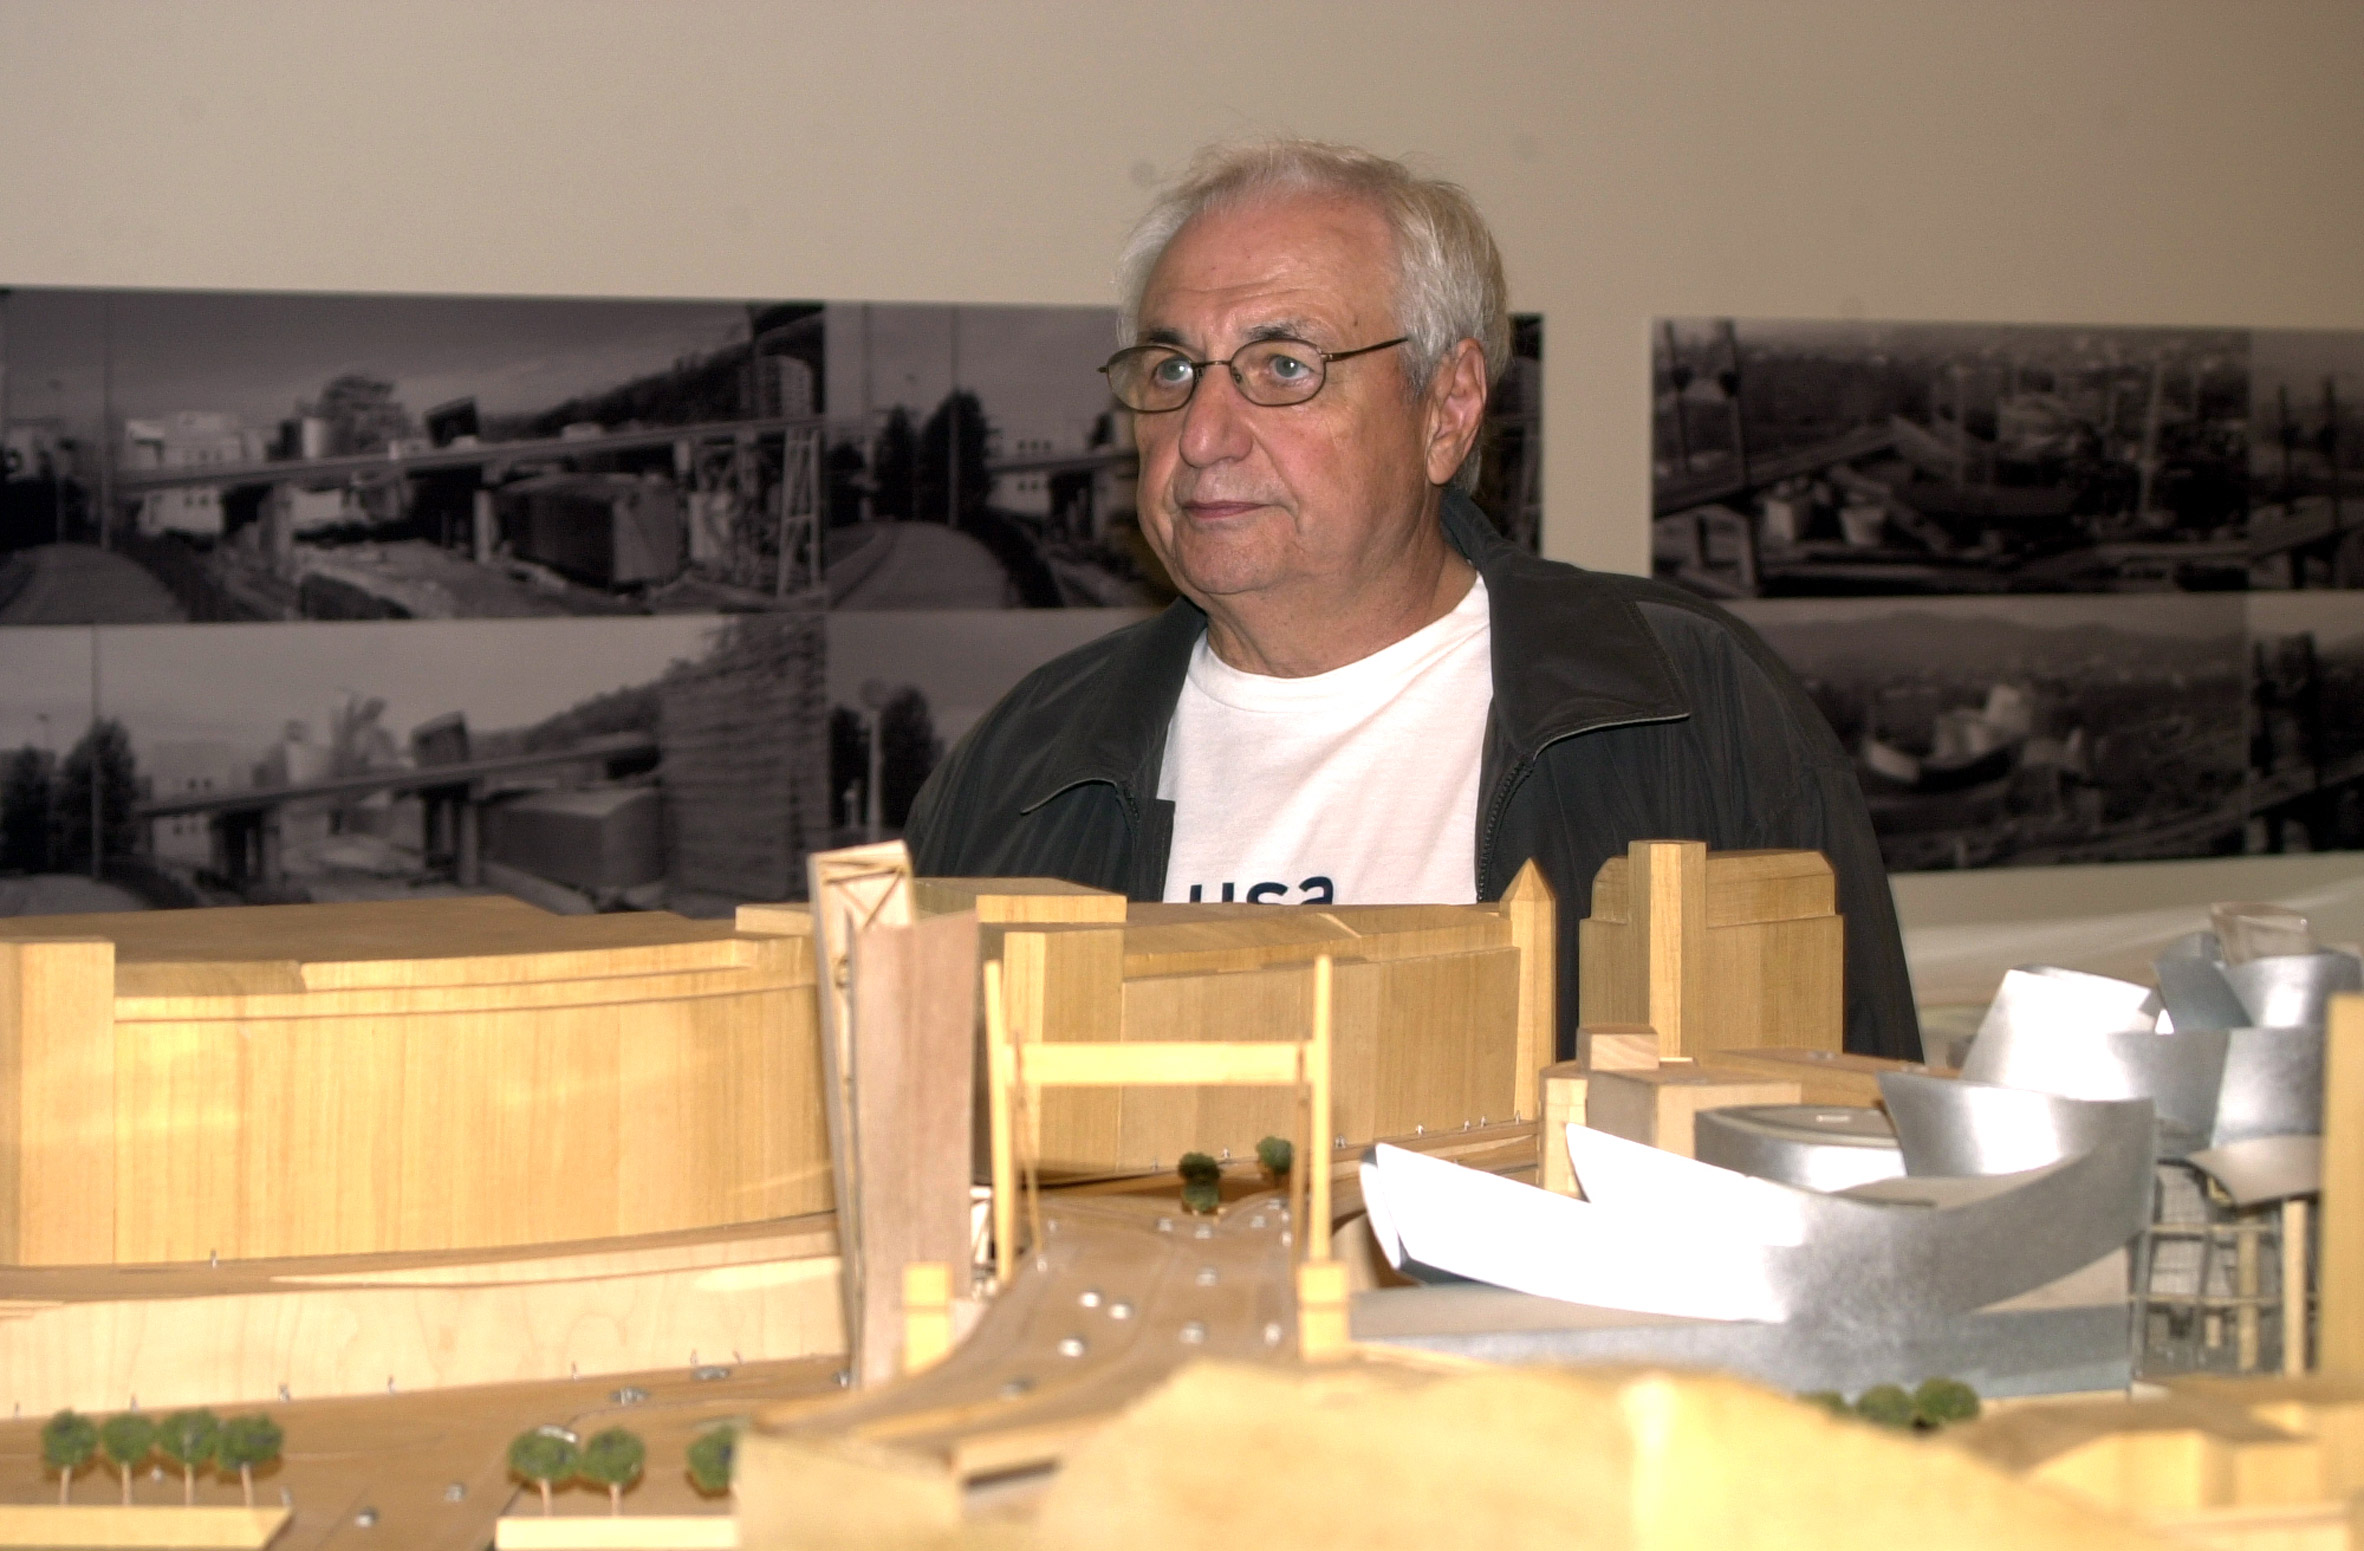 Frank Gehry with model of Guggenheim Bilbao